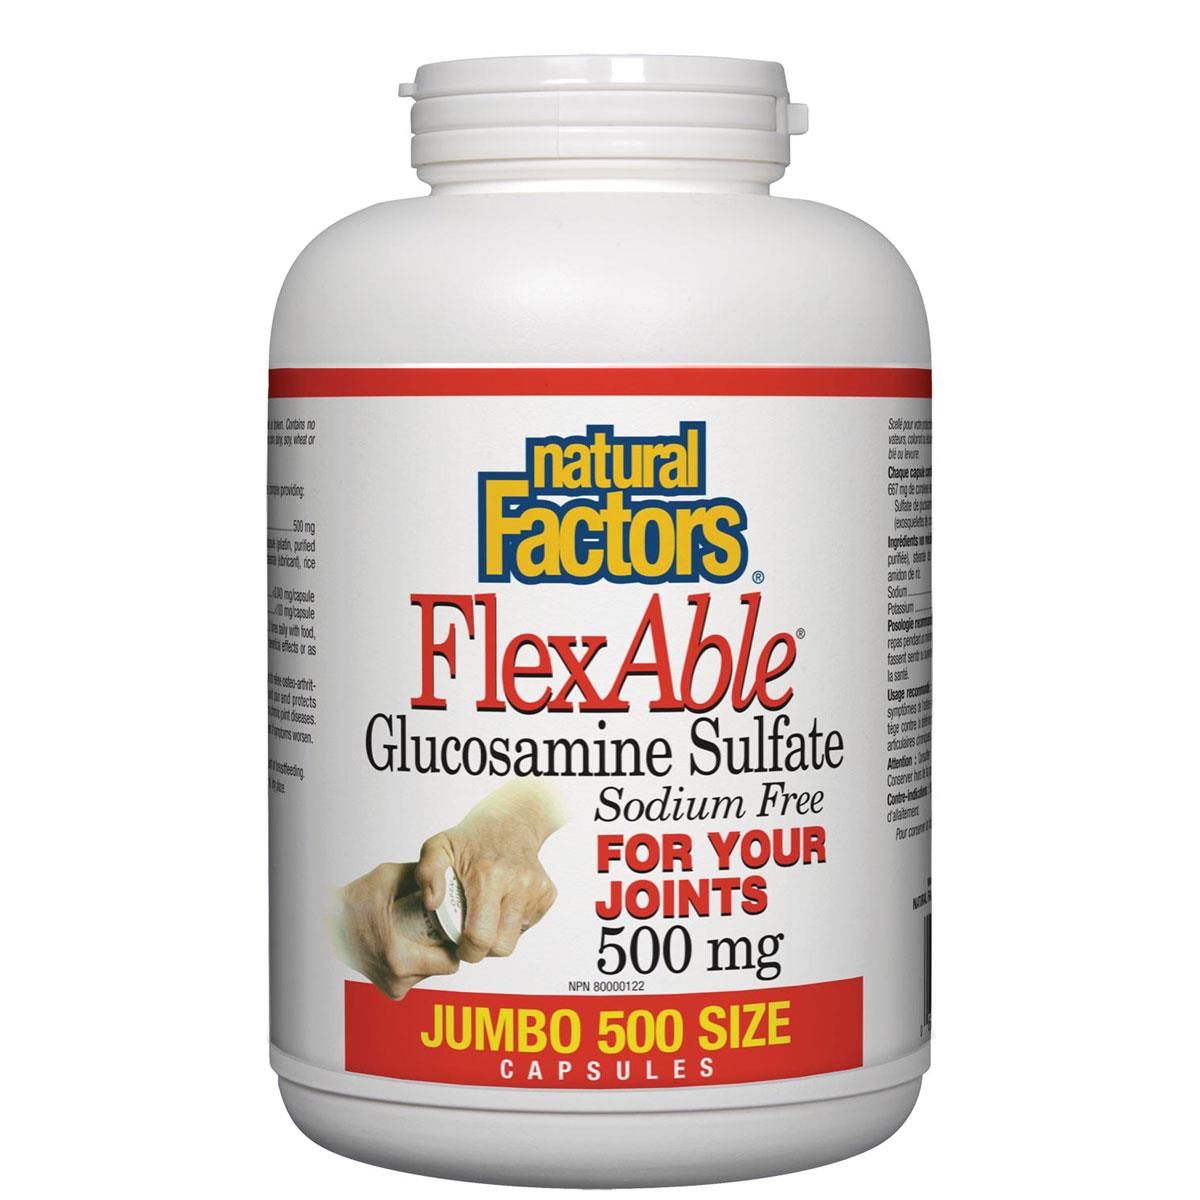 Natural Factors FlexAble Glucosamine Sulfate, 500mg, 500Caps